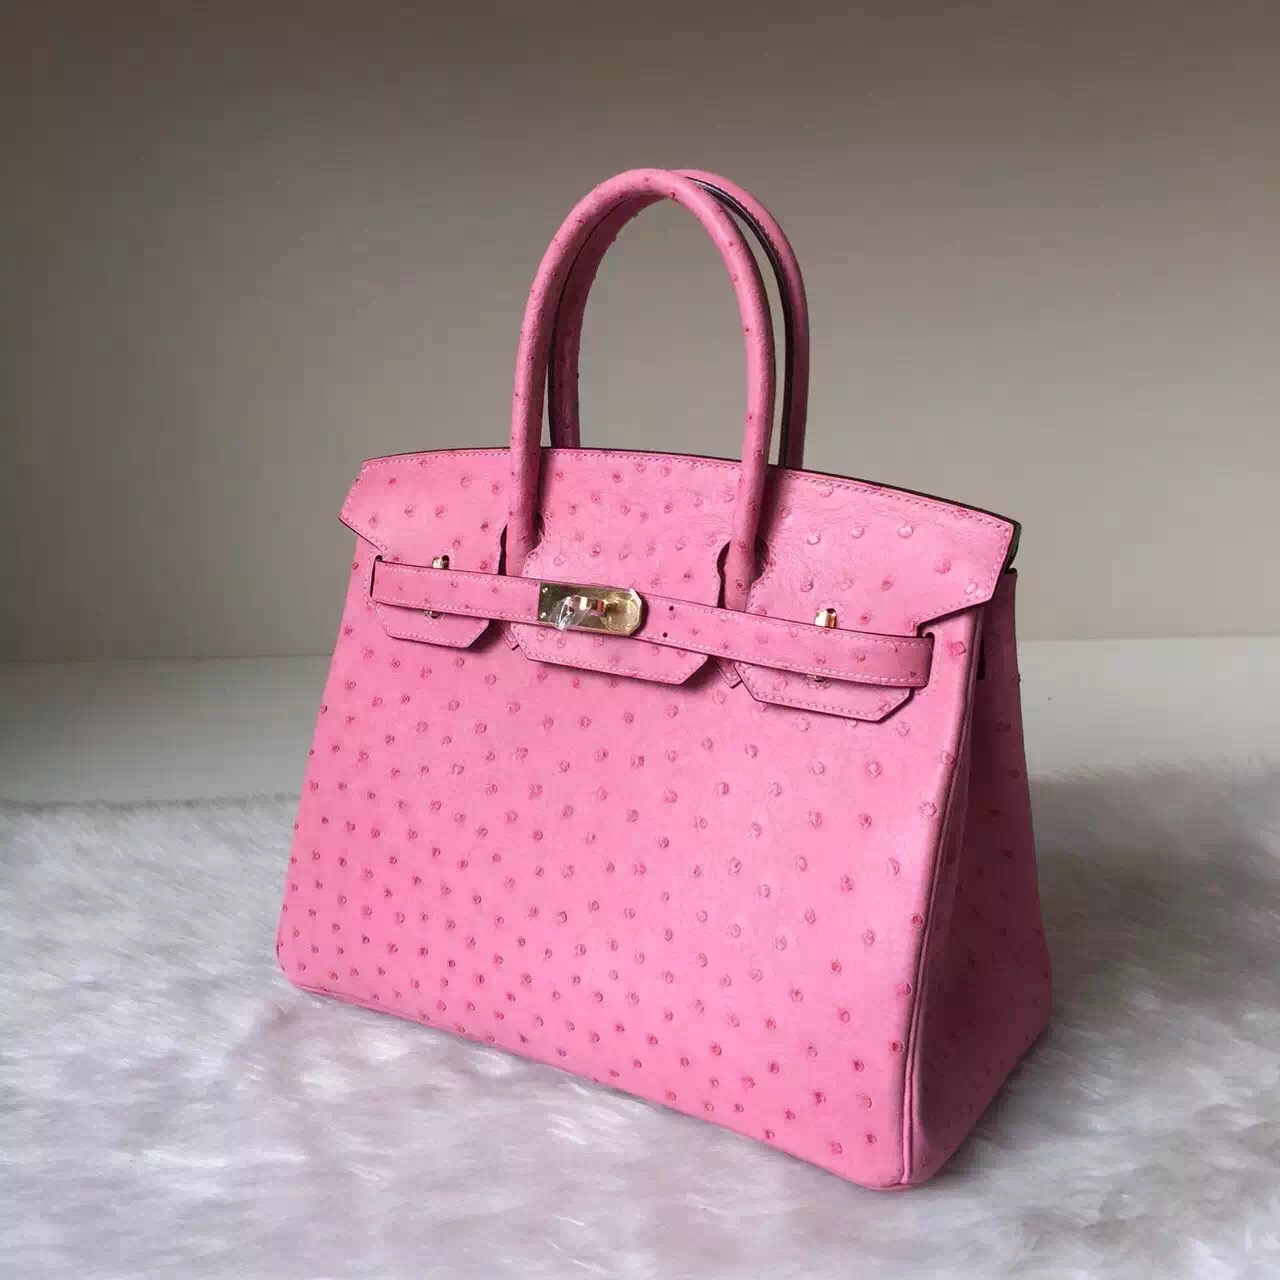 Online Store Hermes Ostrich Leather Birkin Bag 30cm in Peach Pink